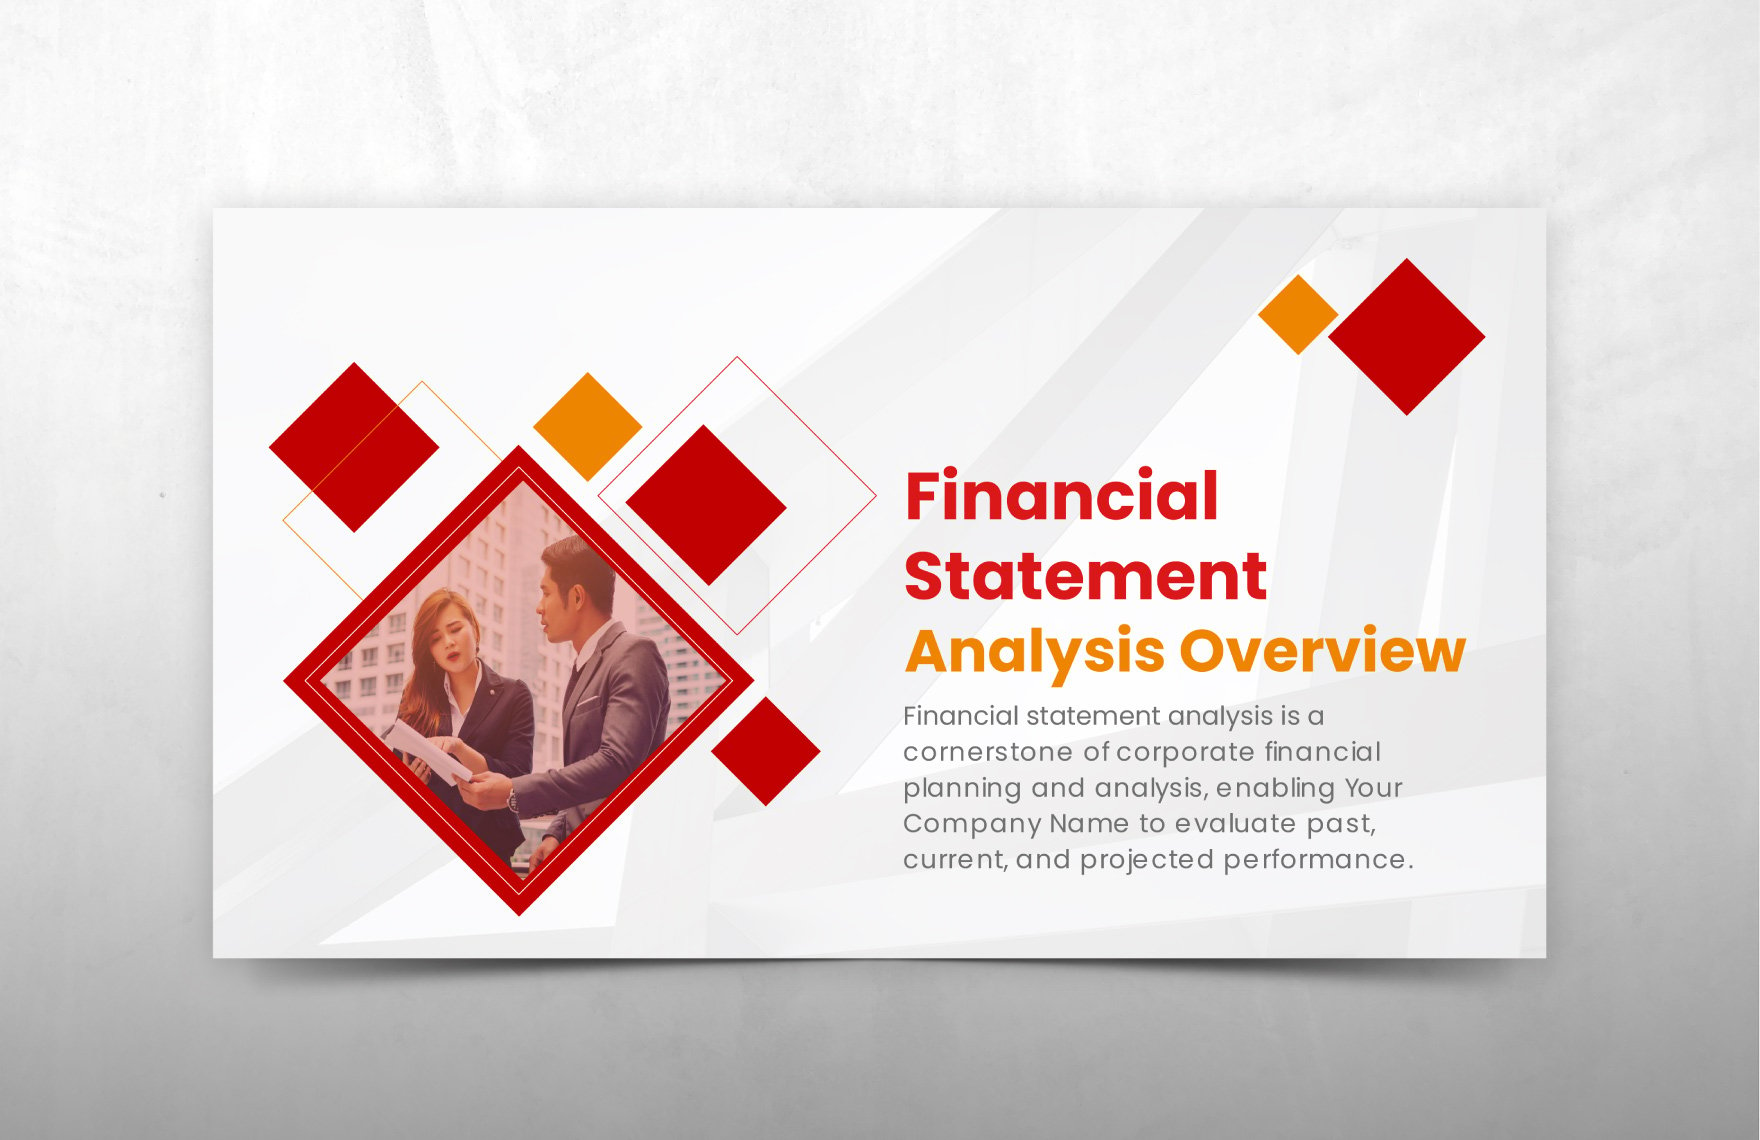 Financial Statement Analysis Techniques Presentation Template